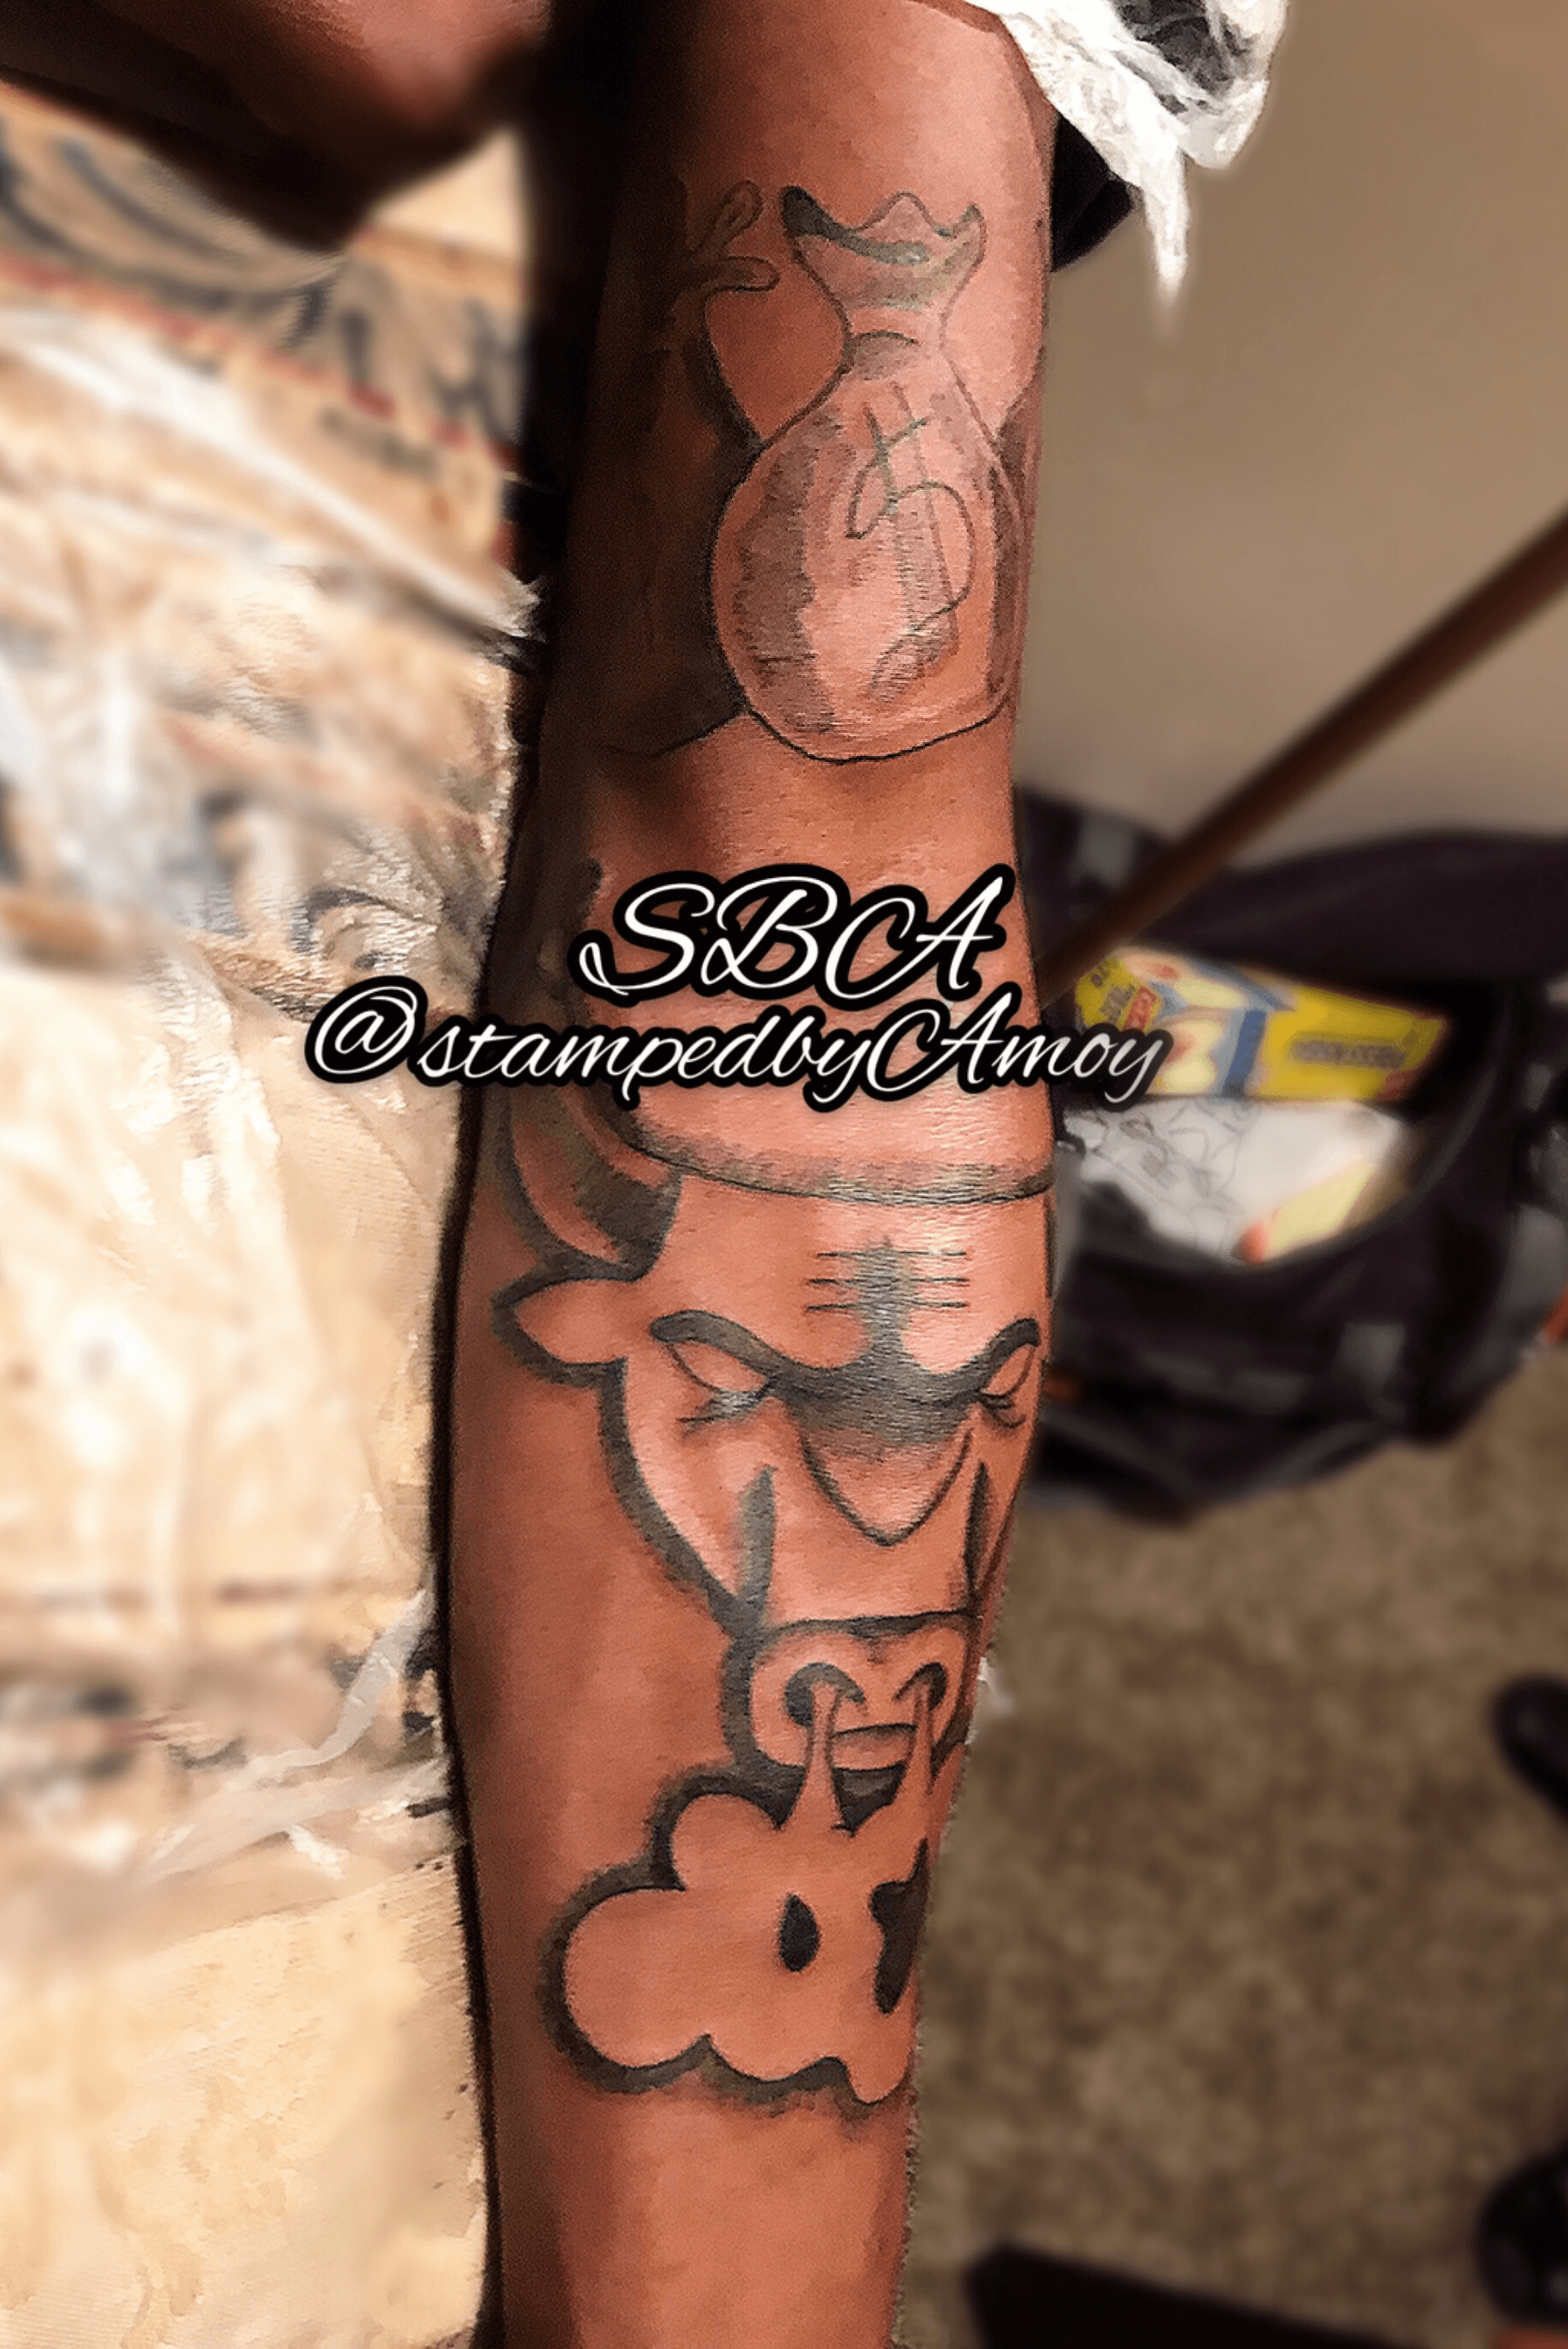 Tattoo uploaded by Amoy Amonte • Chicago bulls tattoo, money bags tattoo,  half sleeve tattoo, Amoy Amonte, female tattoo artist, detailed design •  Tattoodo